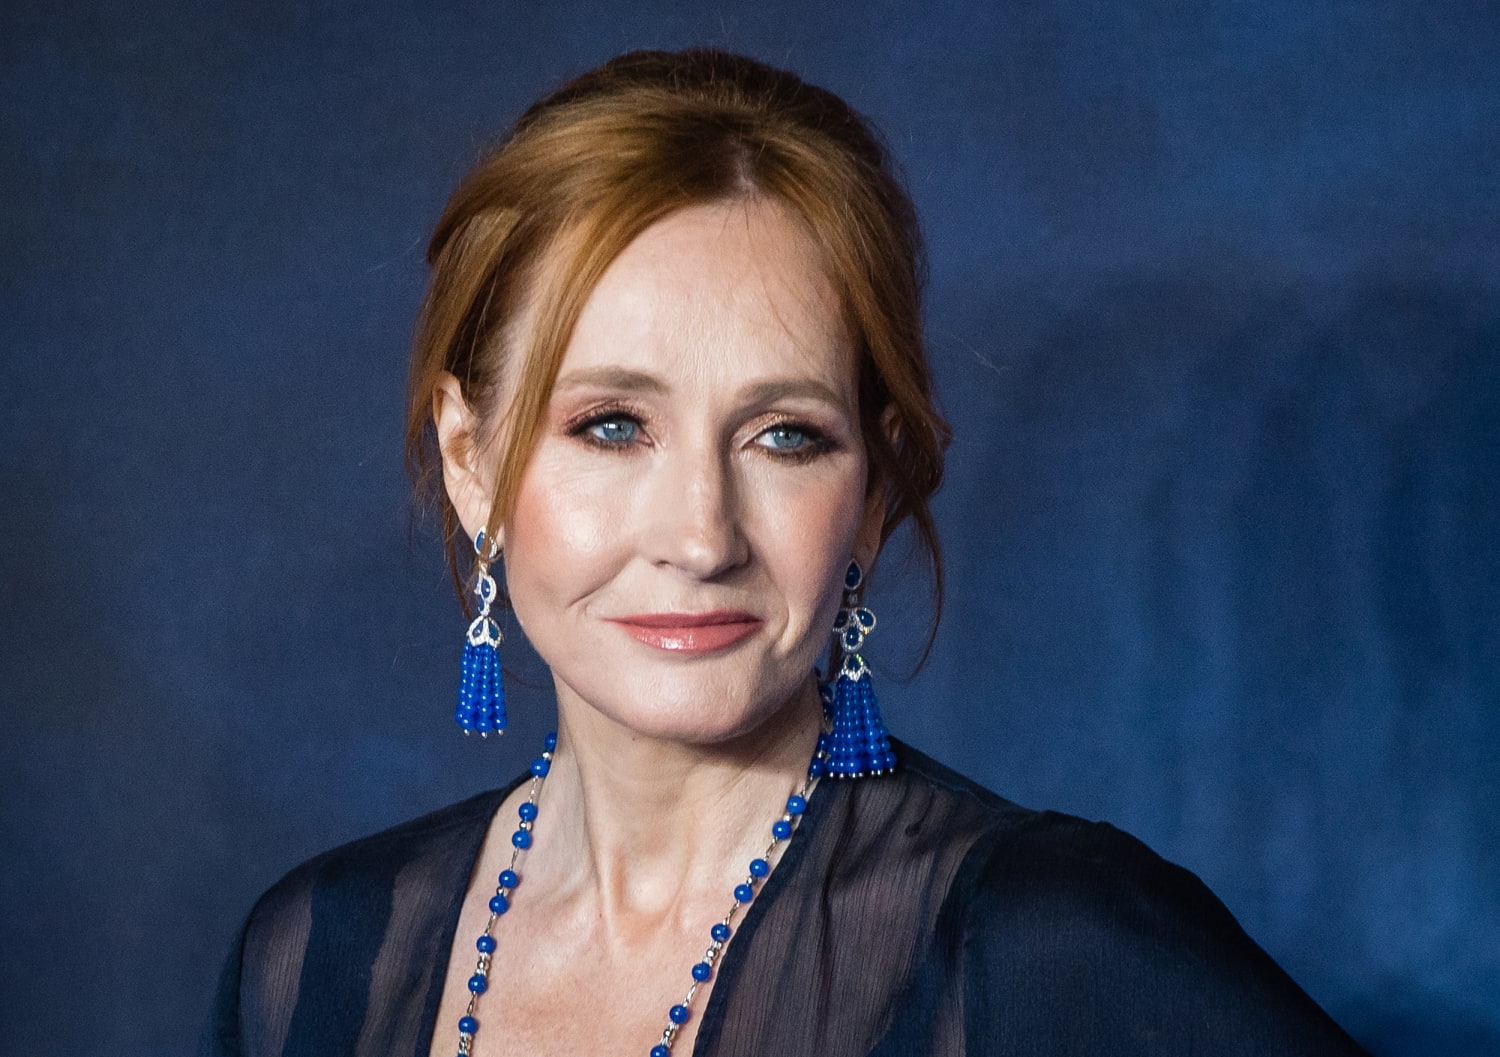 J K Rowling Faces Backlash After Tweeting Support For Transphobic Researcher